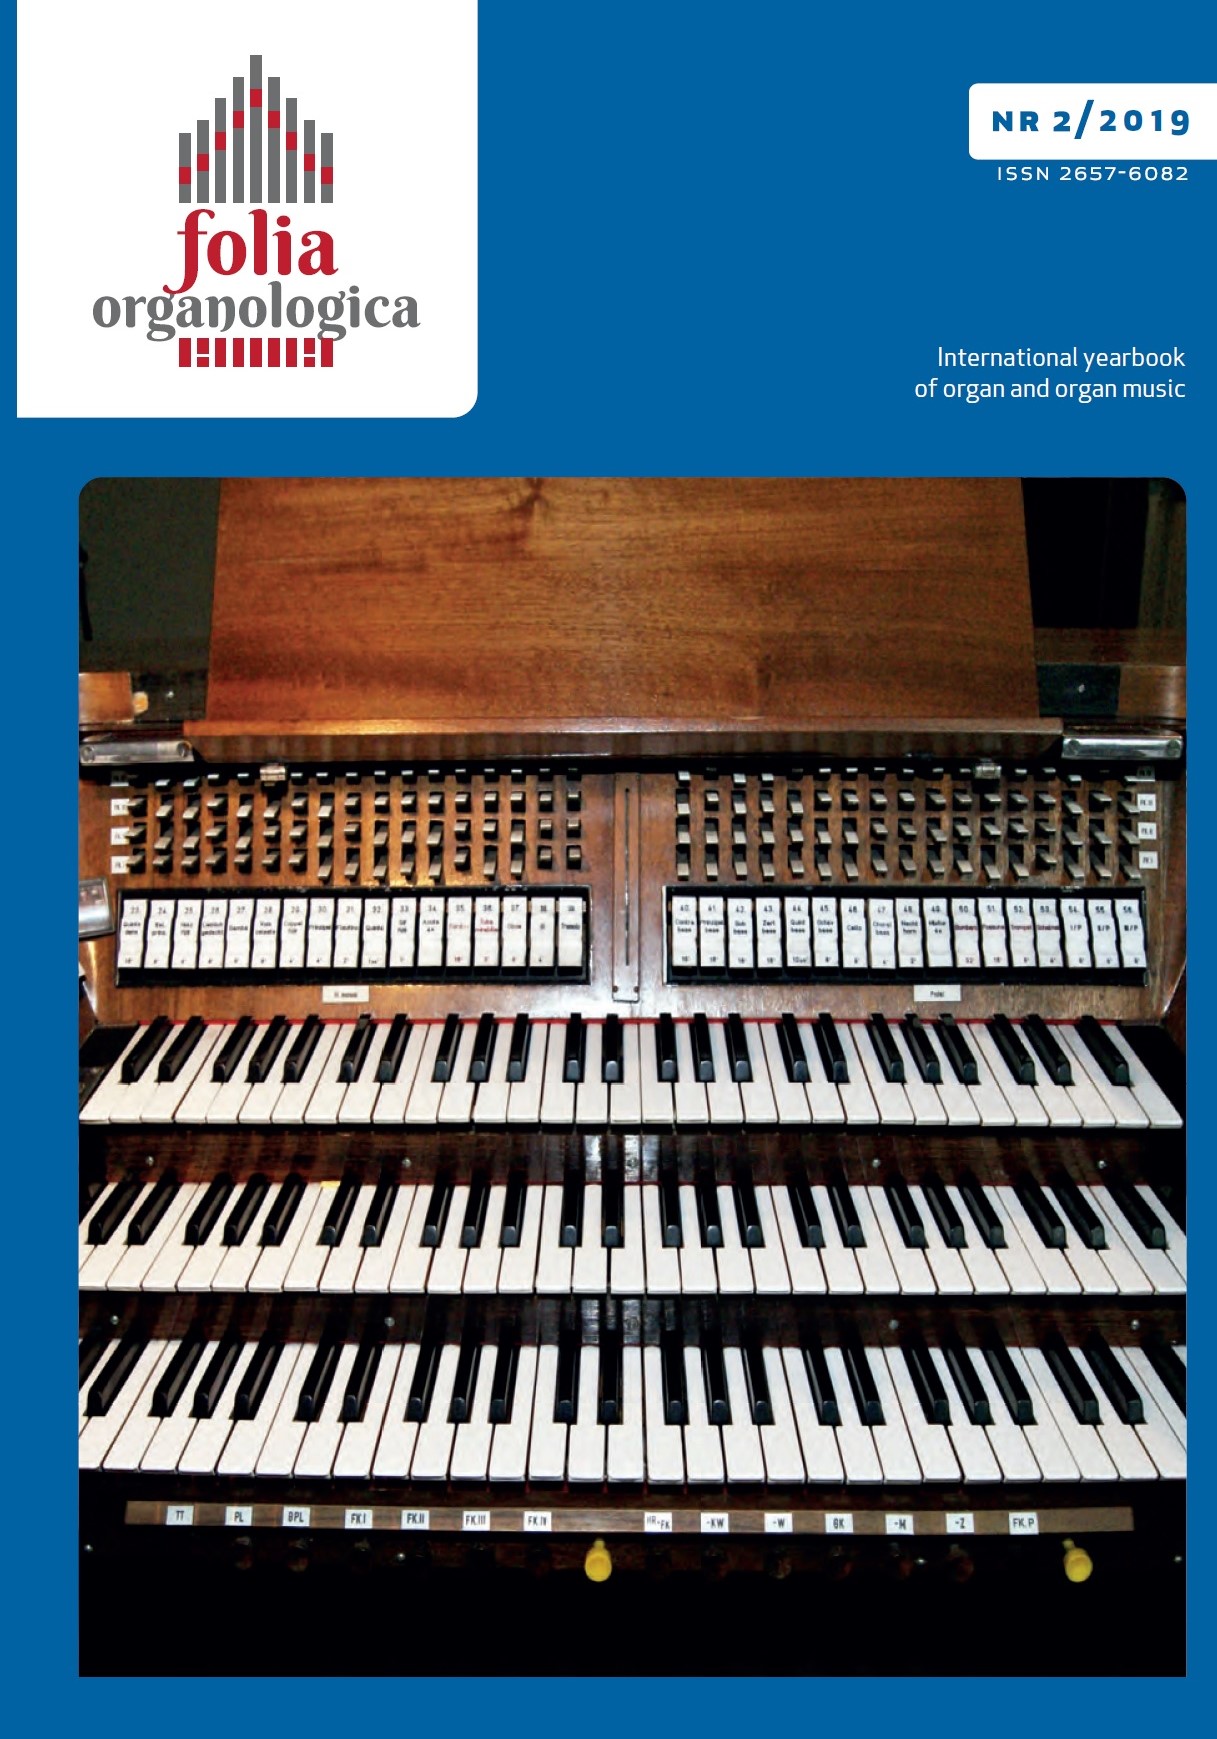 Organ in the piece "Meditations" of Tomasz Kulikowski Cover Image